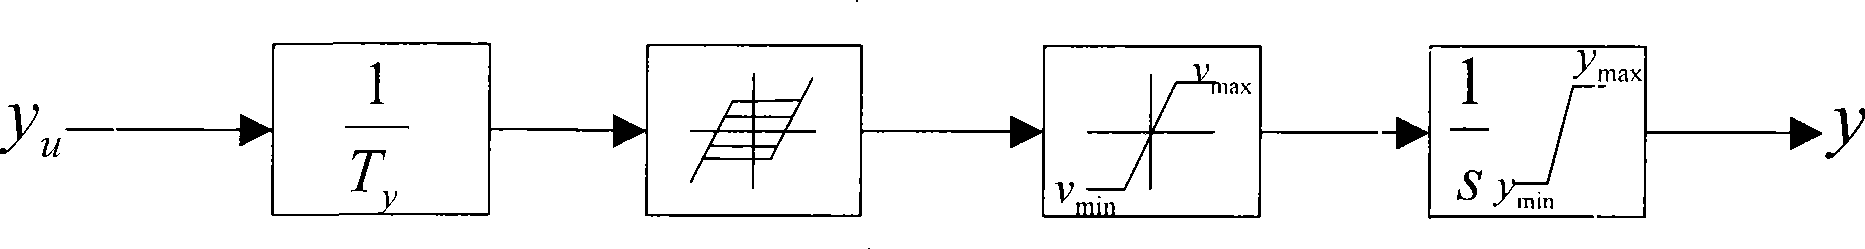 Method for emulating main servo of hydrogovernor